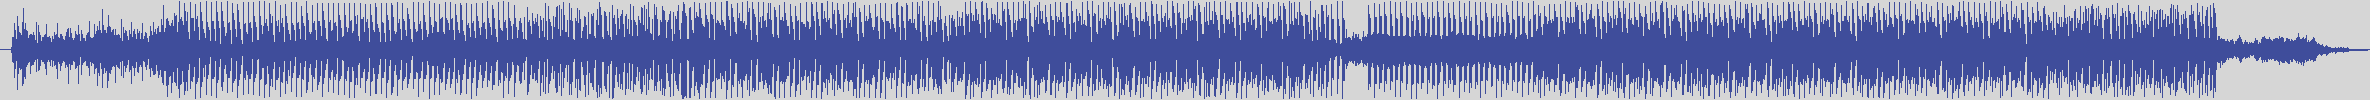 nf_boyz_records [NFY041] Jedi Resistor - Great Spoon [Original Mix] audio wave form